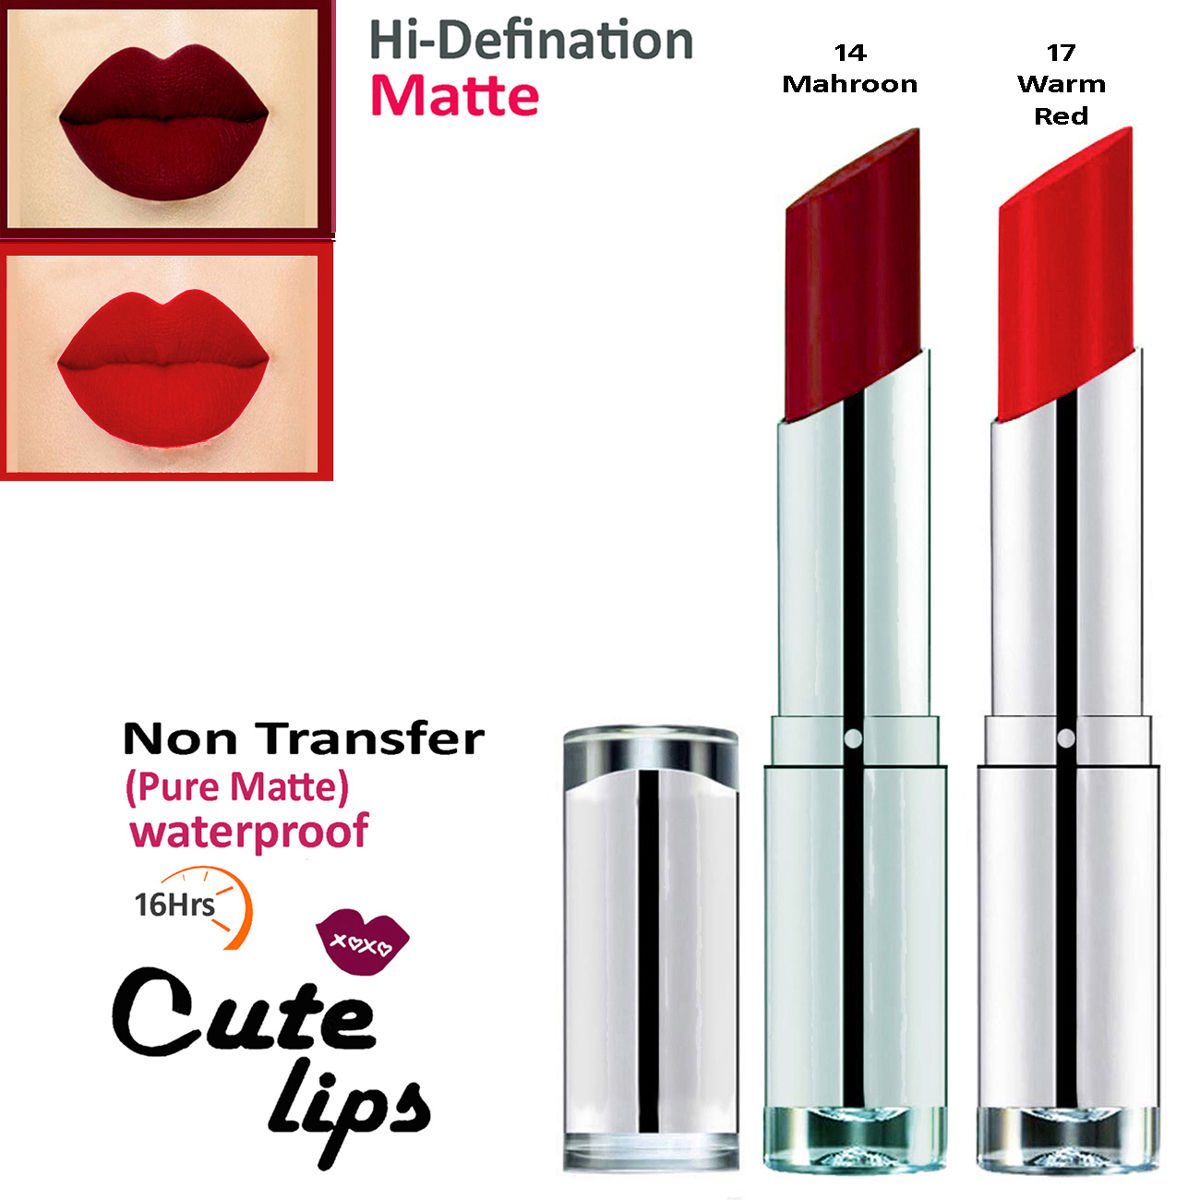 bq BLAQUE Cute Lips Non Transfer Matte Lipstick 2.4 gm each - 14 ...